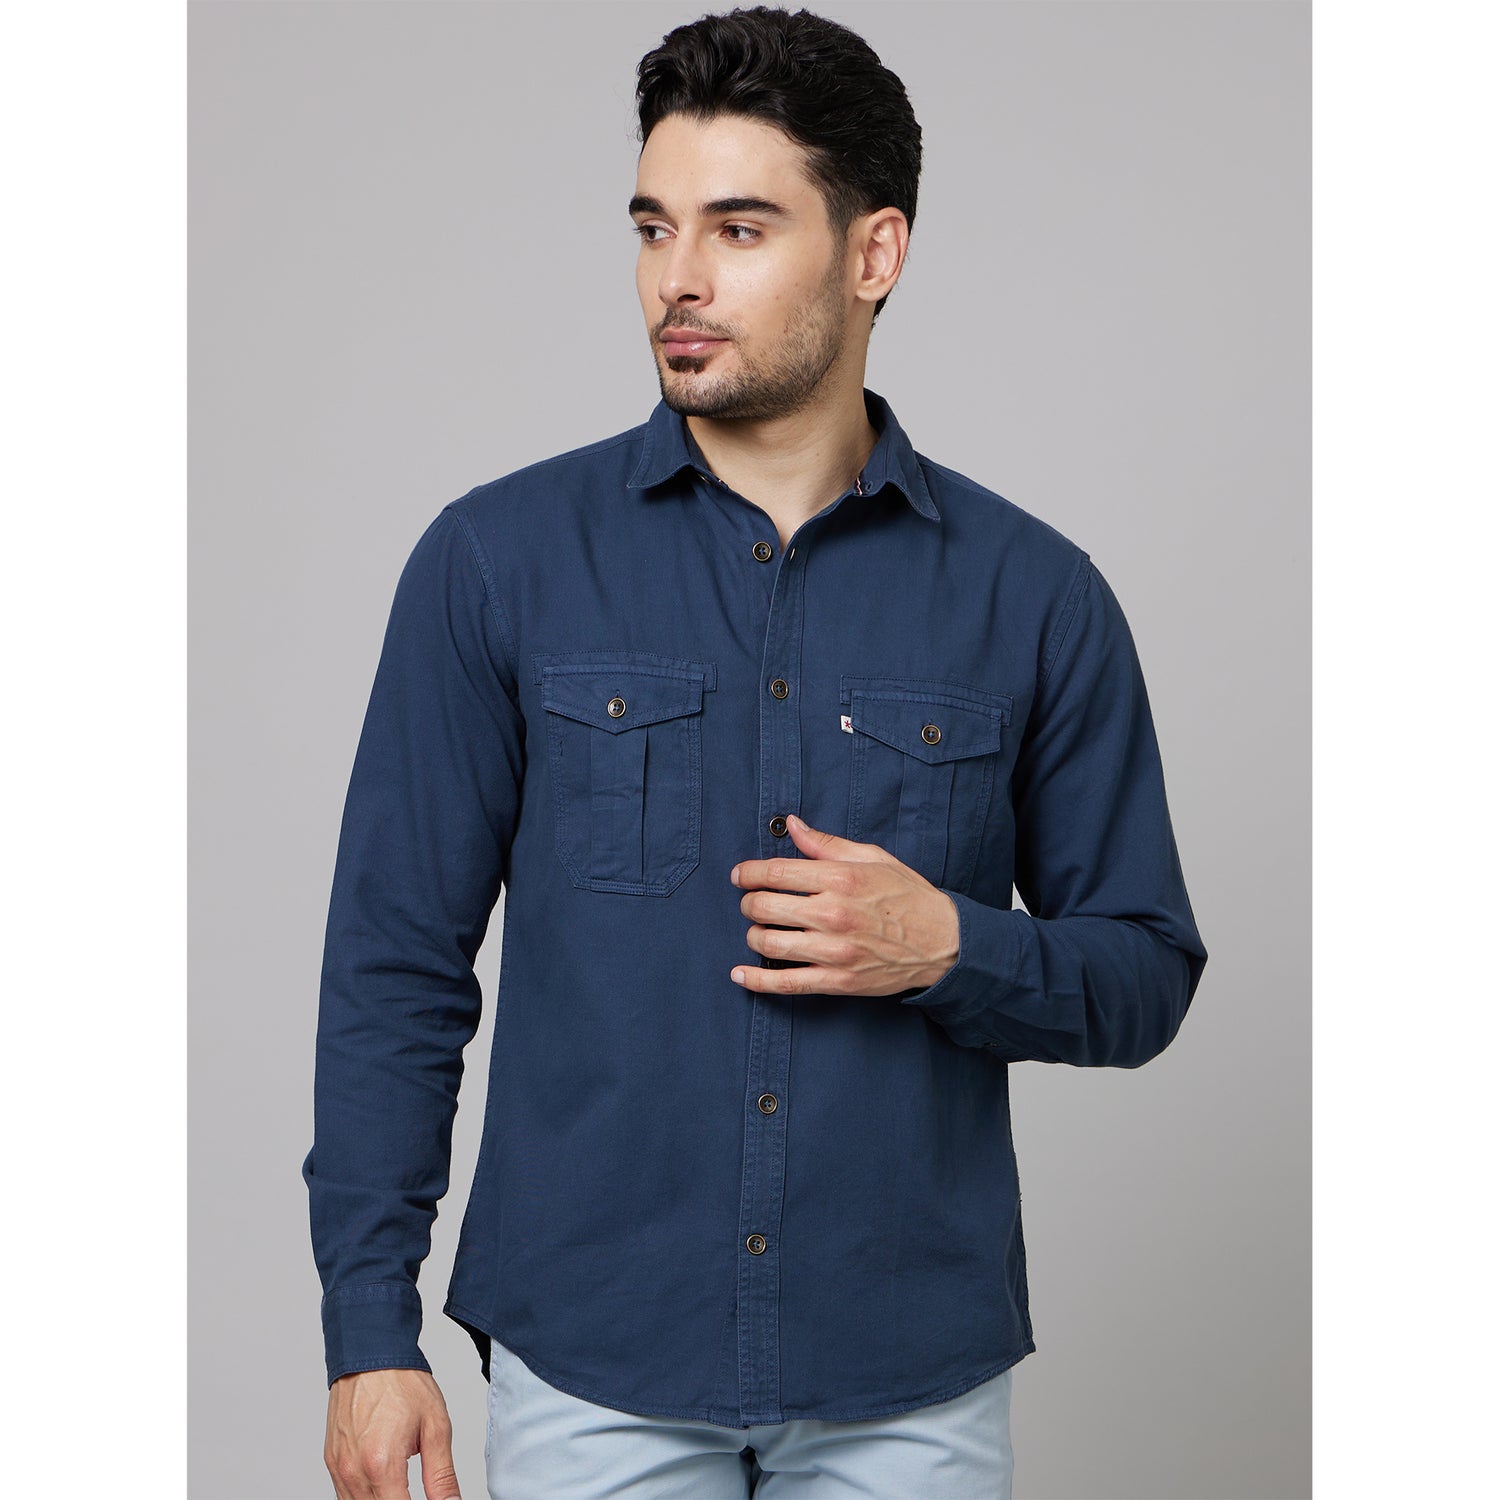 Dark Blue Spread Collar Classic Fit Opaque Casual Shirt (DAOVER)